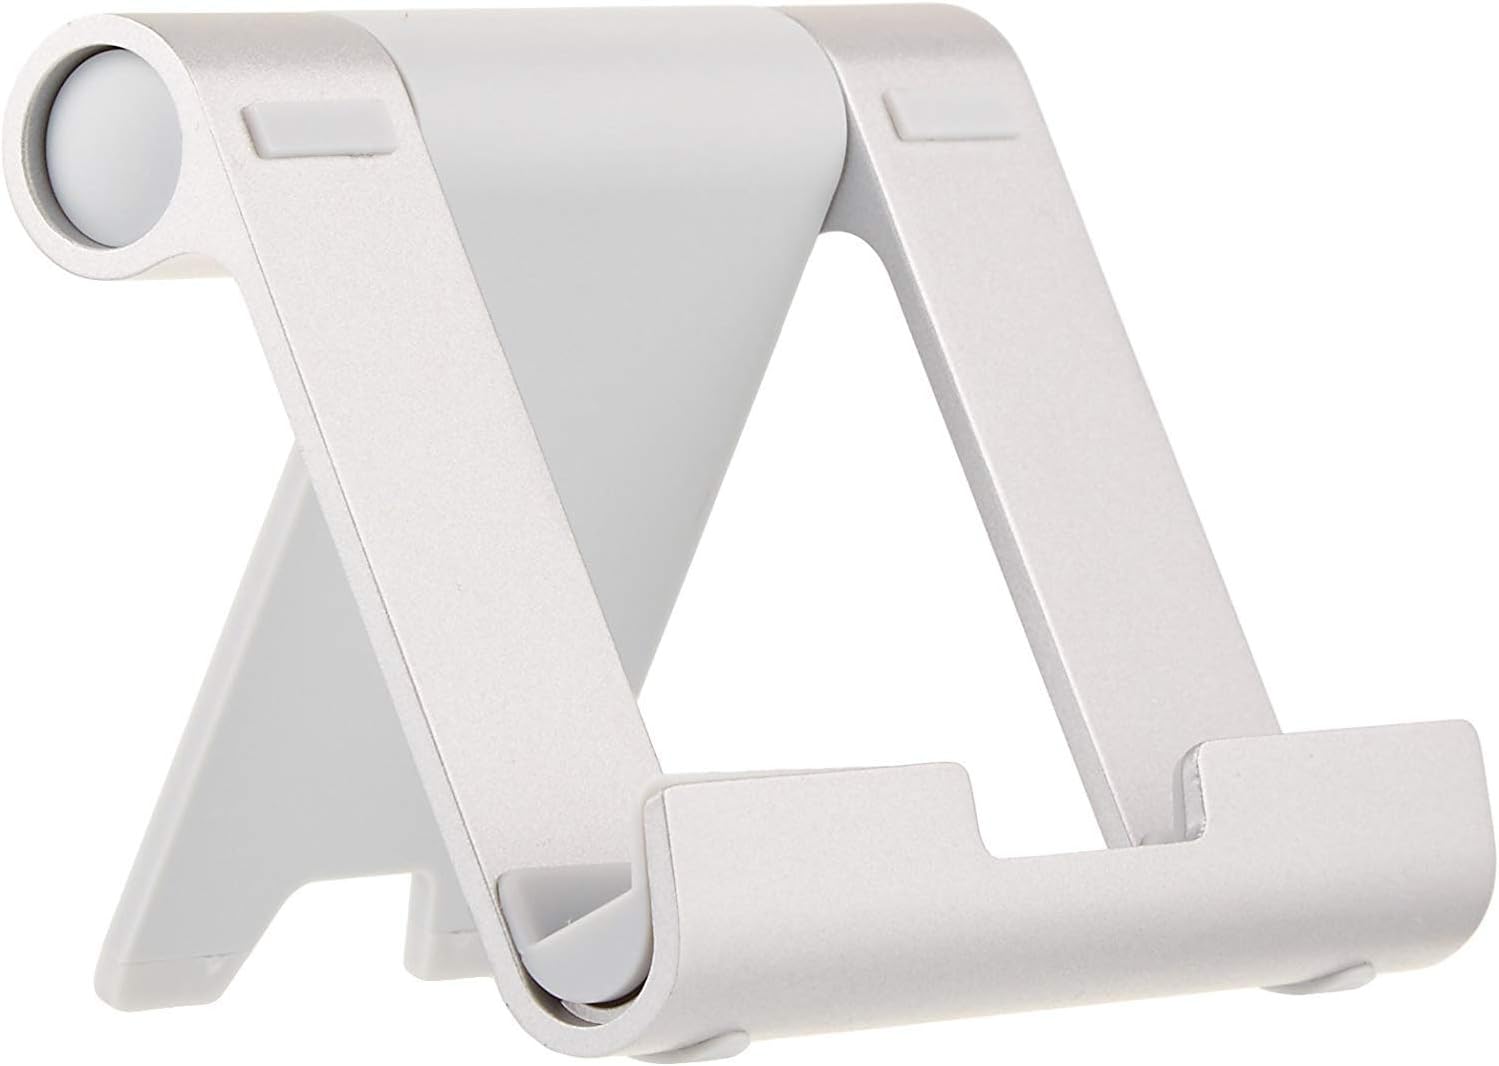 Amazon Basics Multi-Angle Portable Stand Silver review